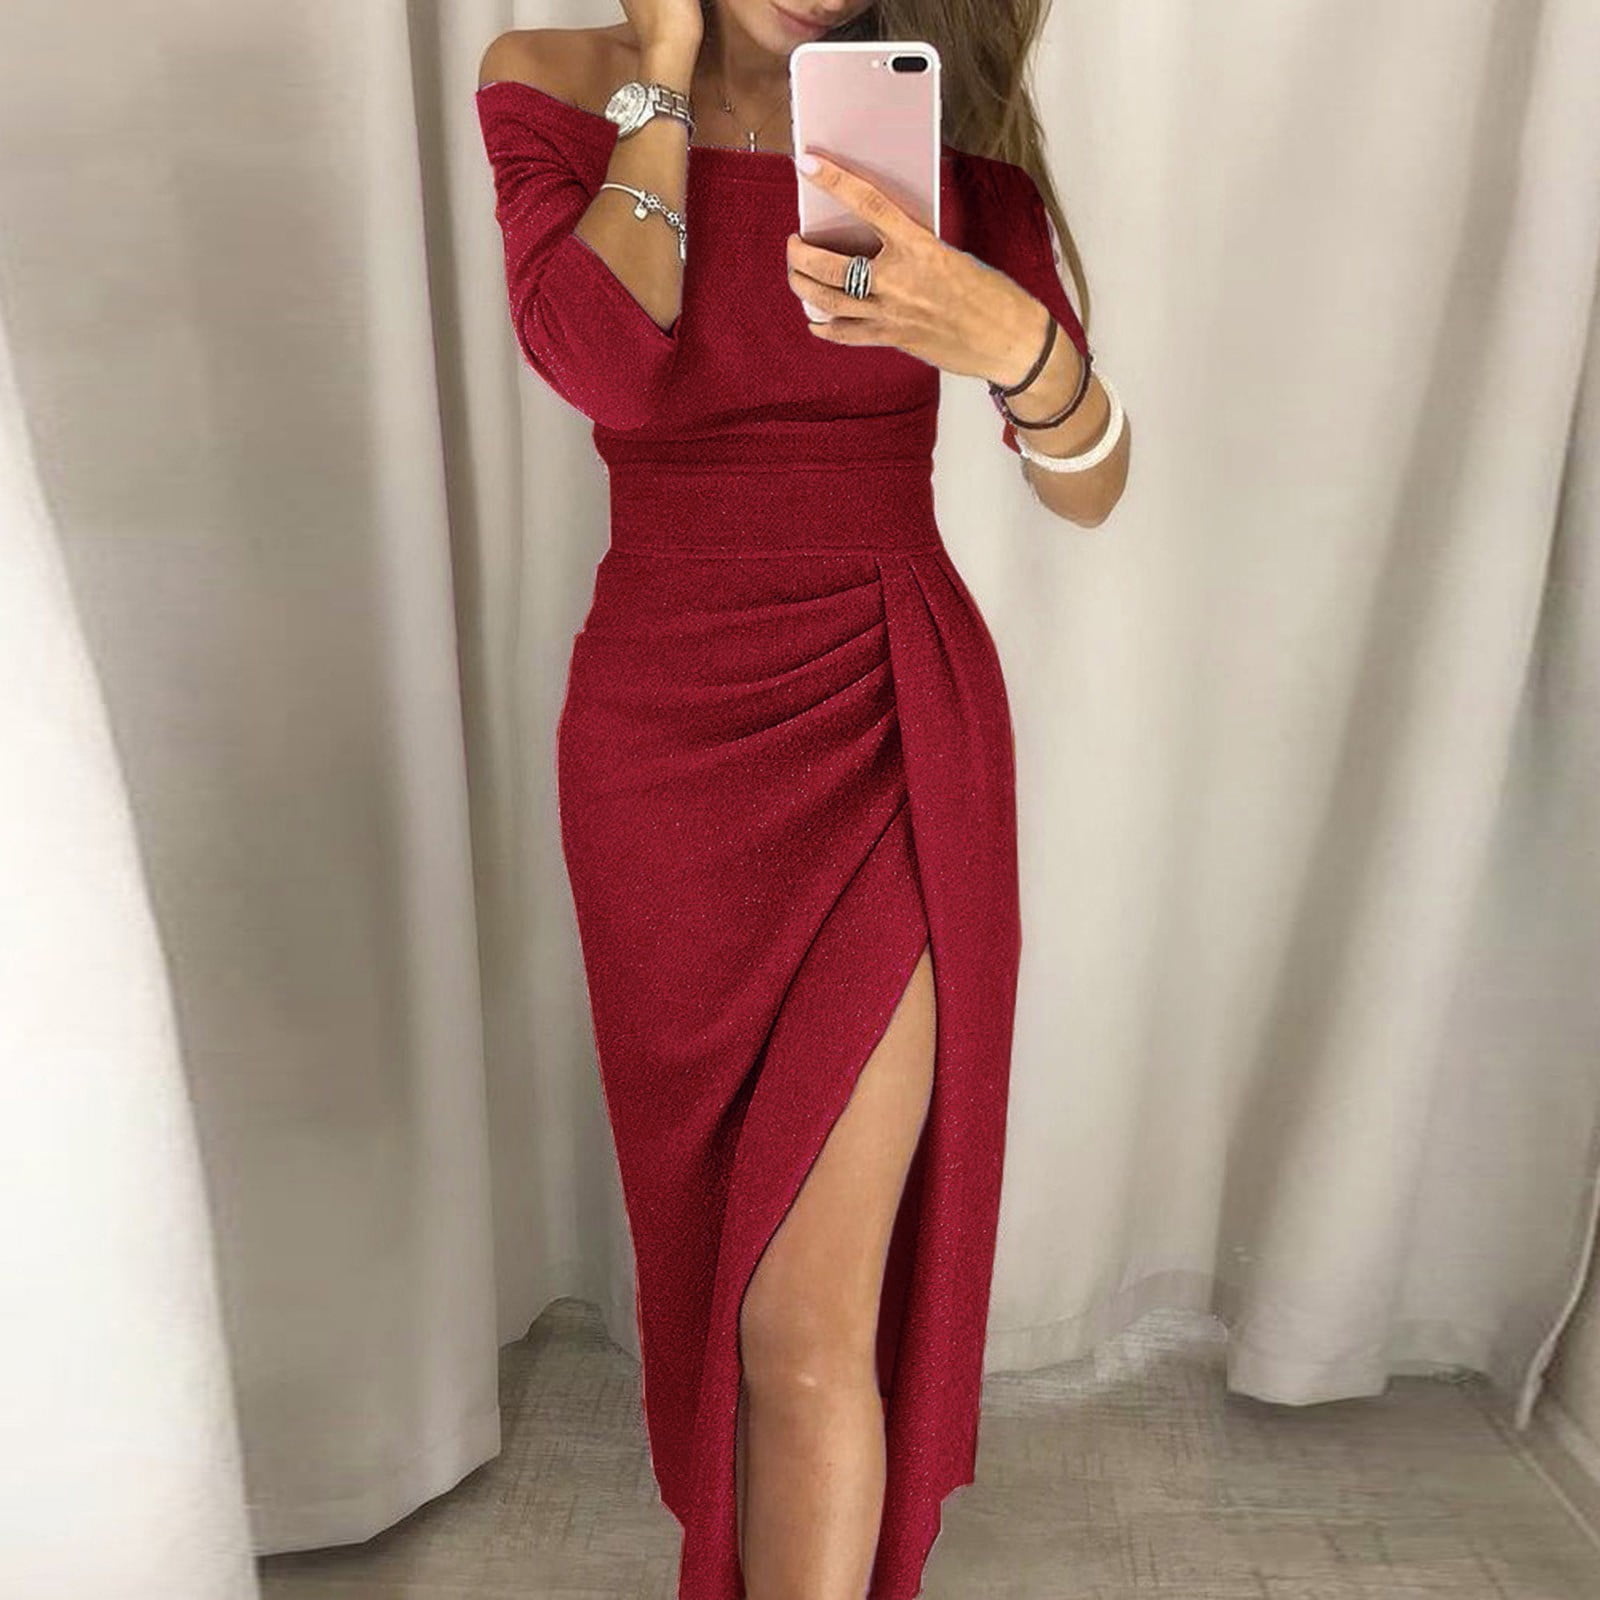 Sleeveless dress - Brick red - Ladies | H&M IN